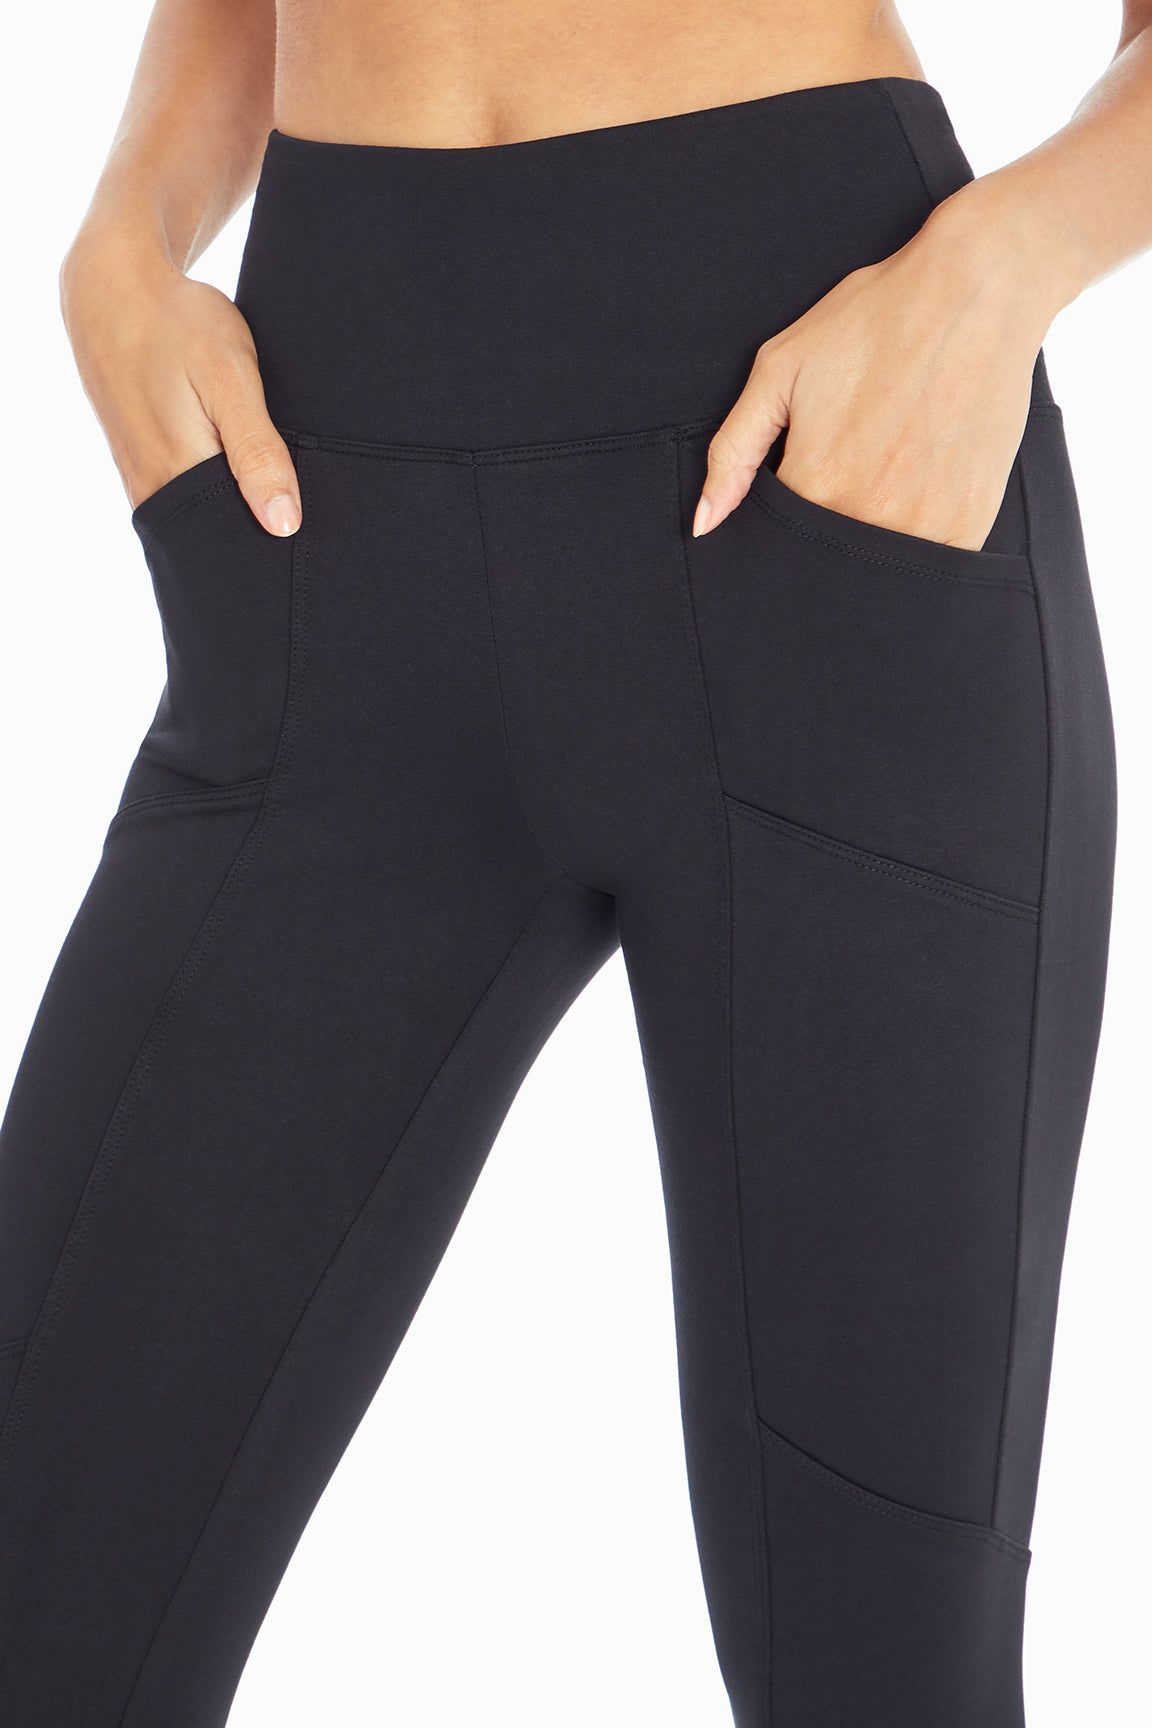 Marika Ladies' High Waist Dri-Wik Active Tight with Side Pockets (Black,  Large) 